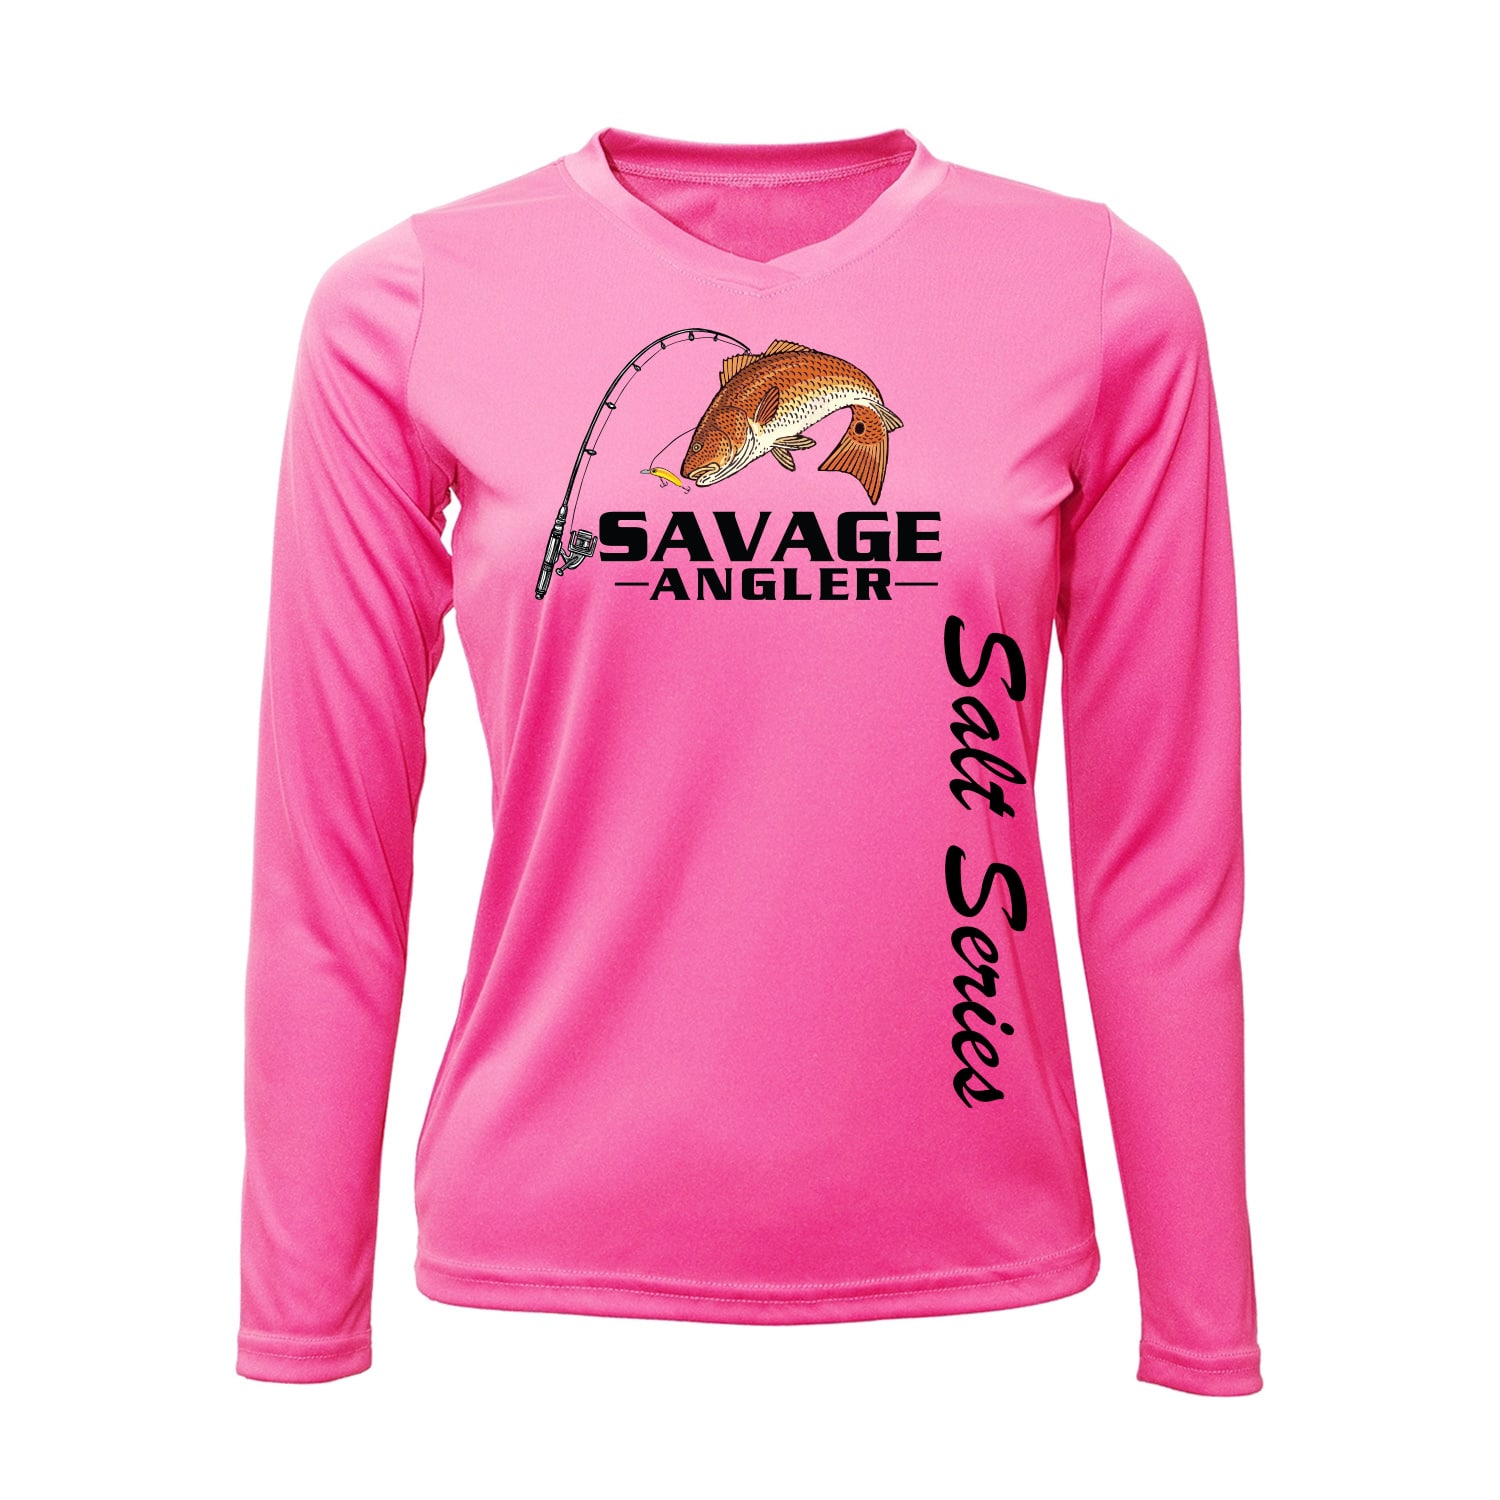 https://savageangler.com/wp-content/uploads/2021/03/Savage-Angler-Womens-Performance-Shirt_Hot_Pink_Front-1.jpg